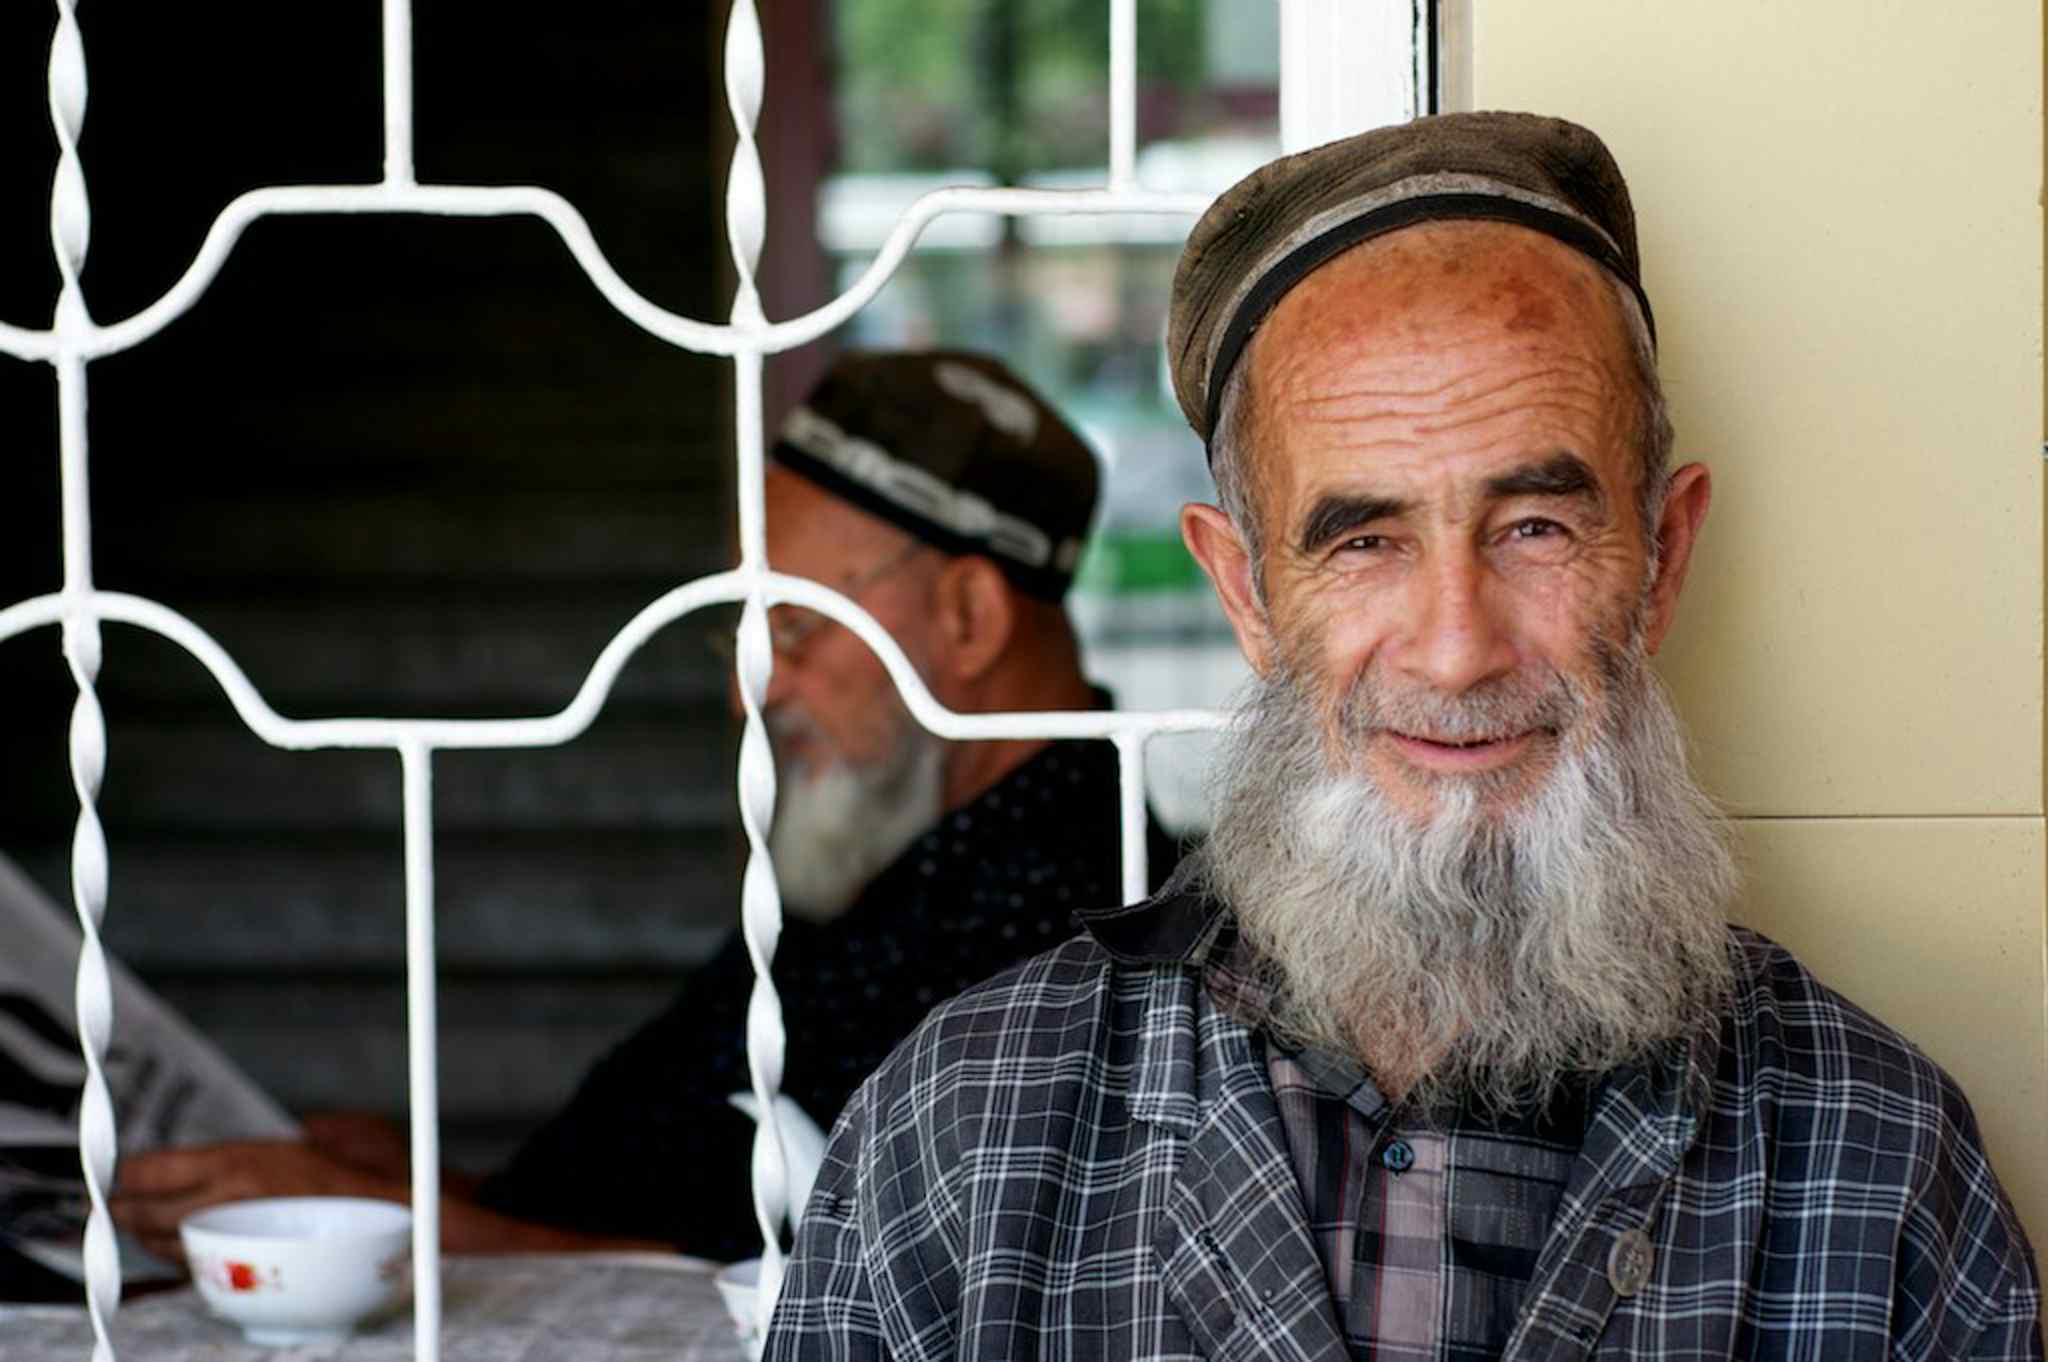 Title: Old man, Dushanbe, Tajikistan
Desc: Photo: Unsplash
https://unsplash.com/photos/Q7E3LcFUDzQ